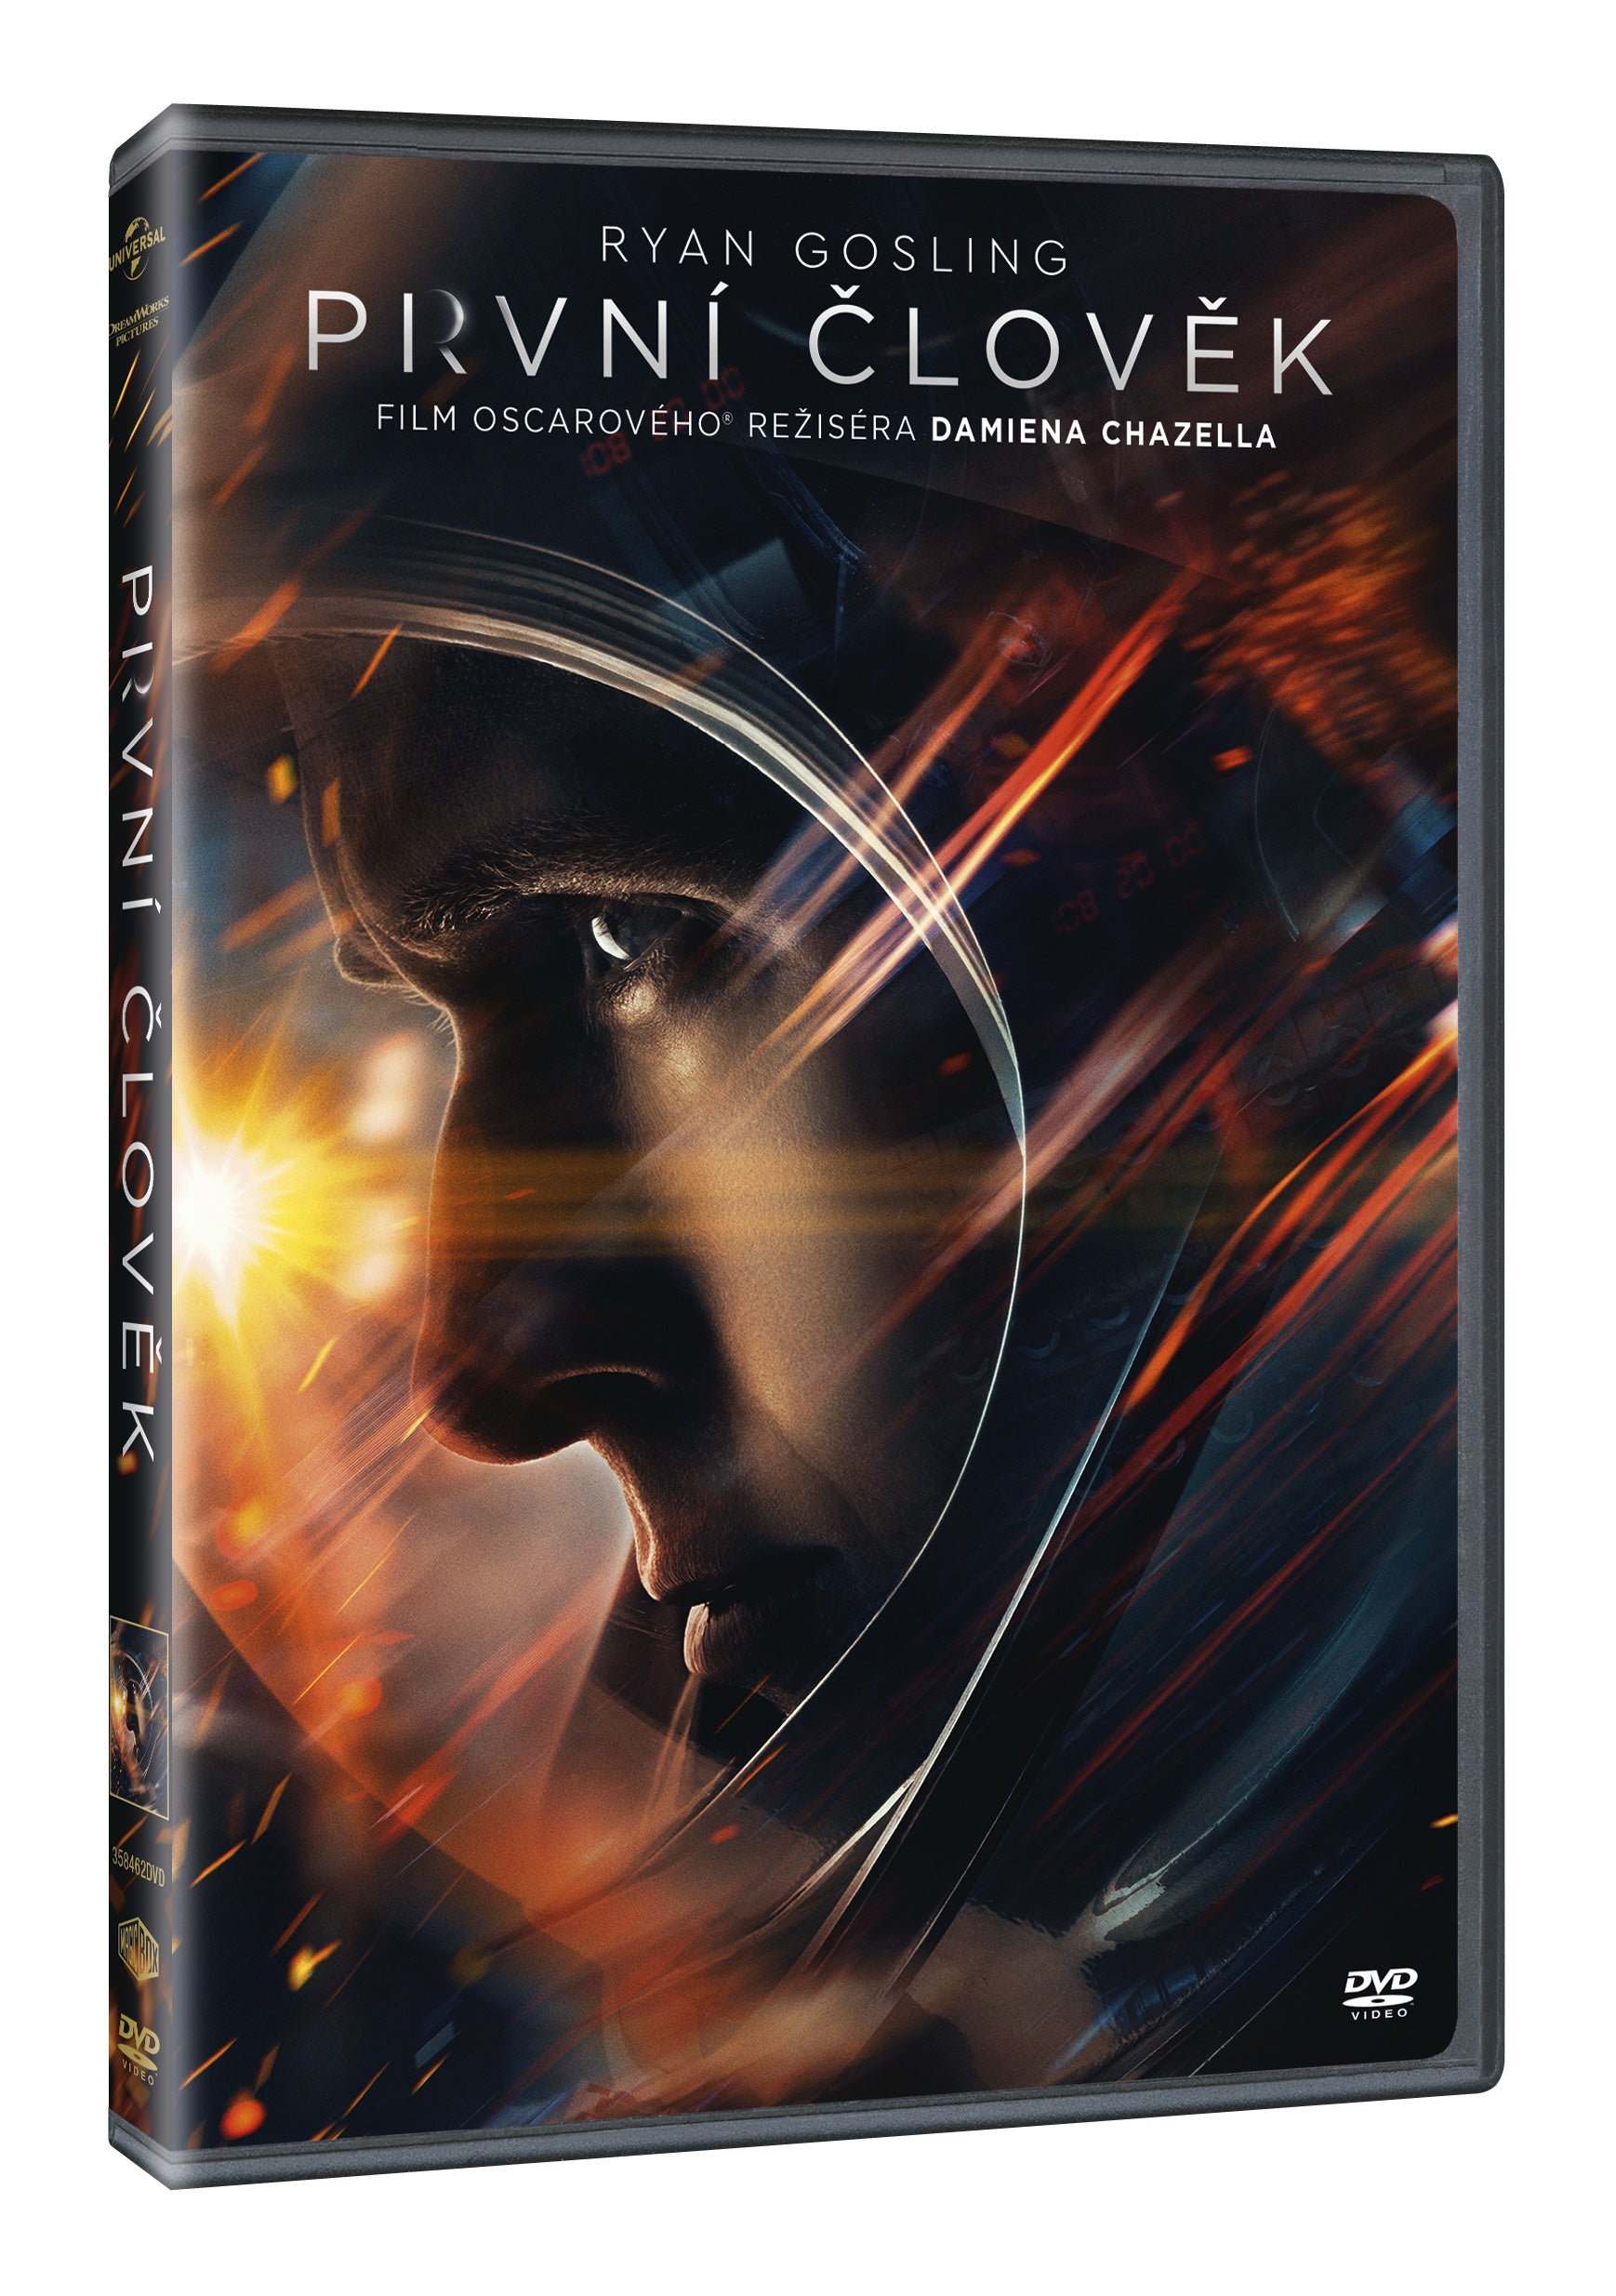 Prvni clovek DVD / First Man